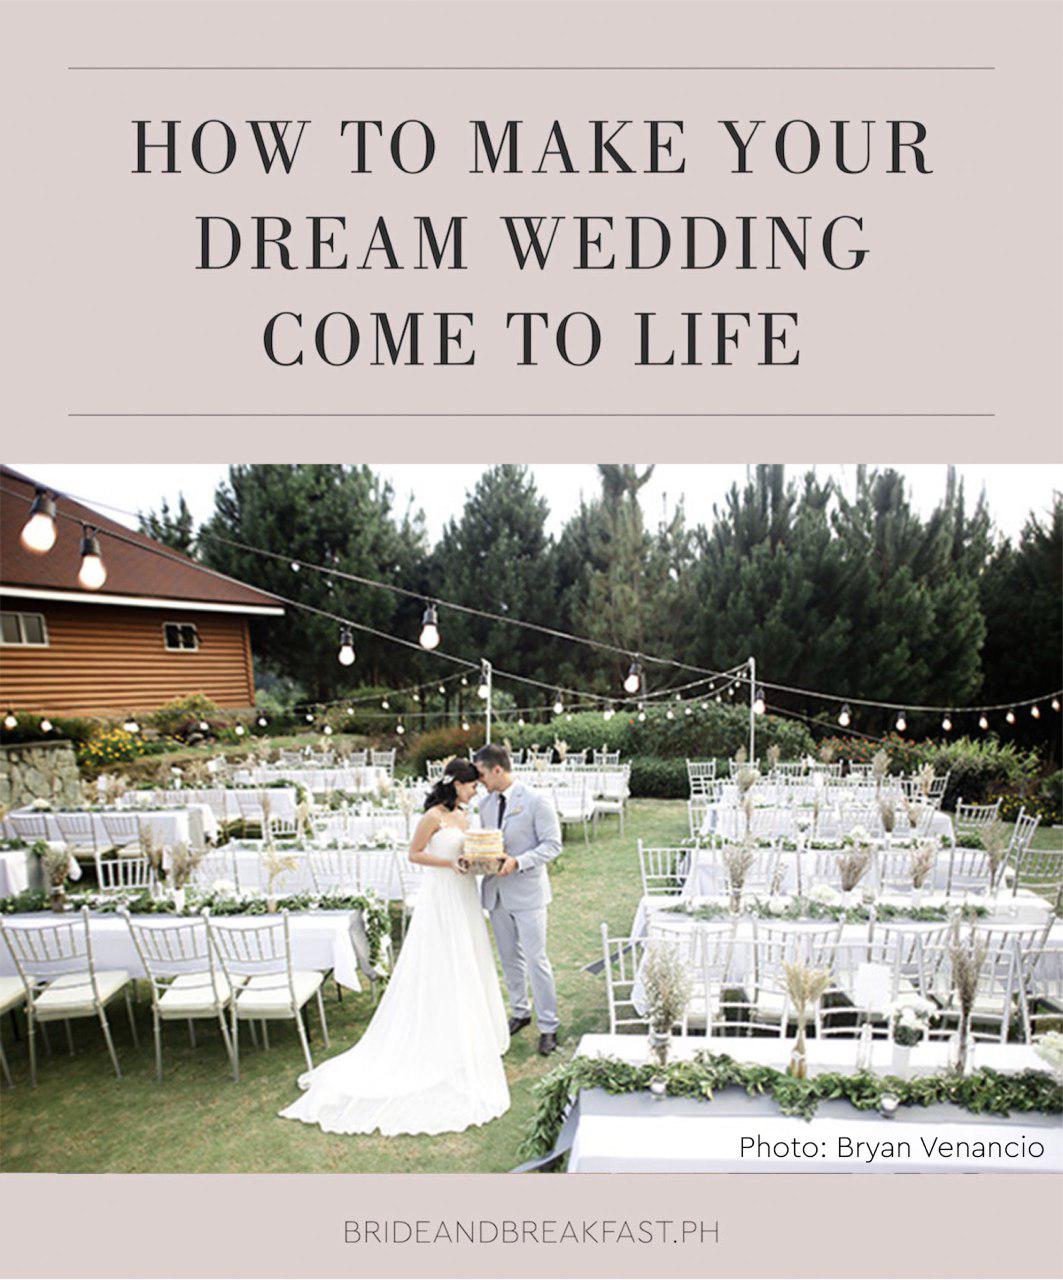 How to Make Your Dream Wedding Come to Life Photo: Bryan Venancio